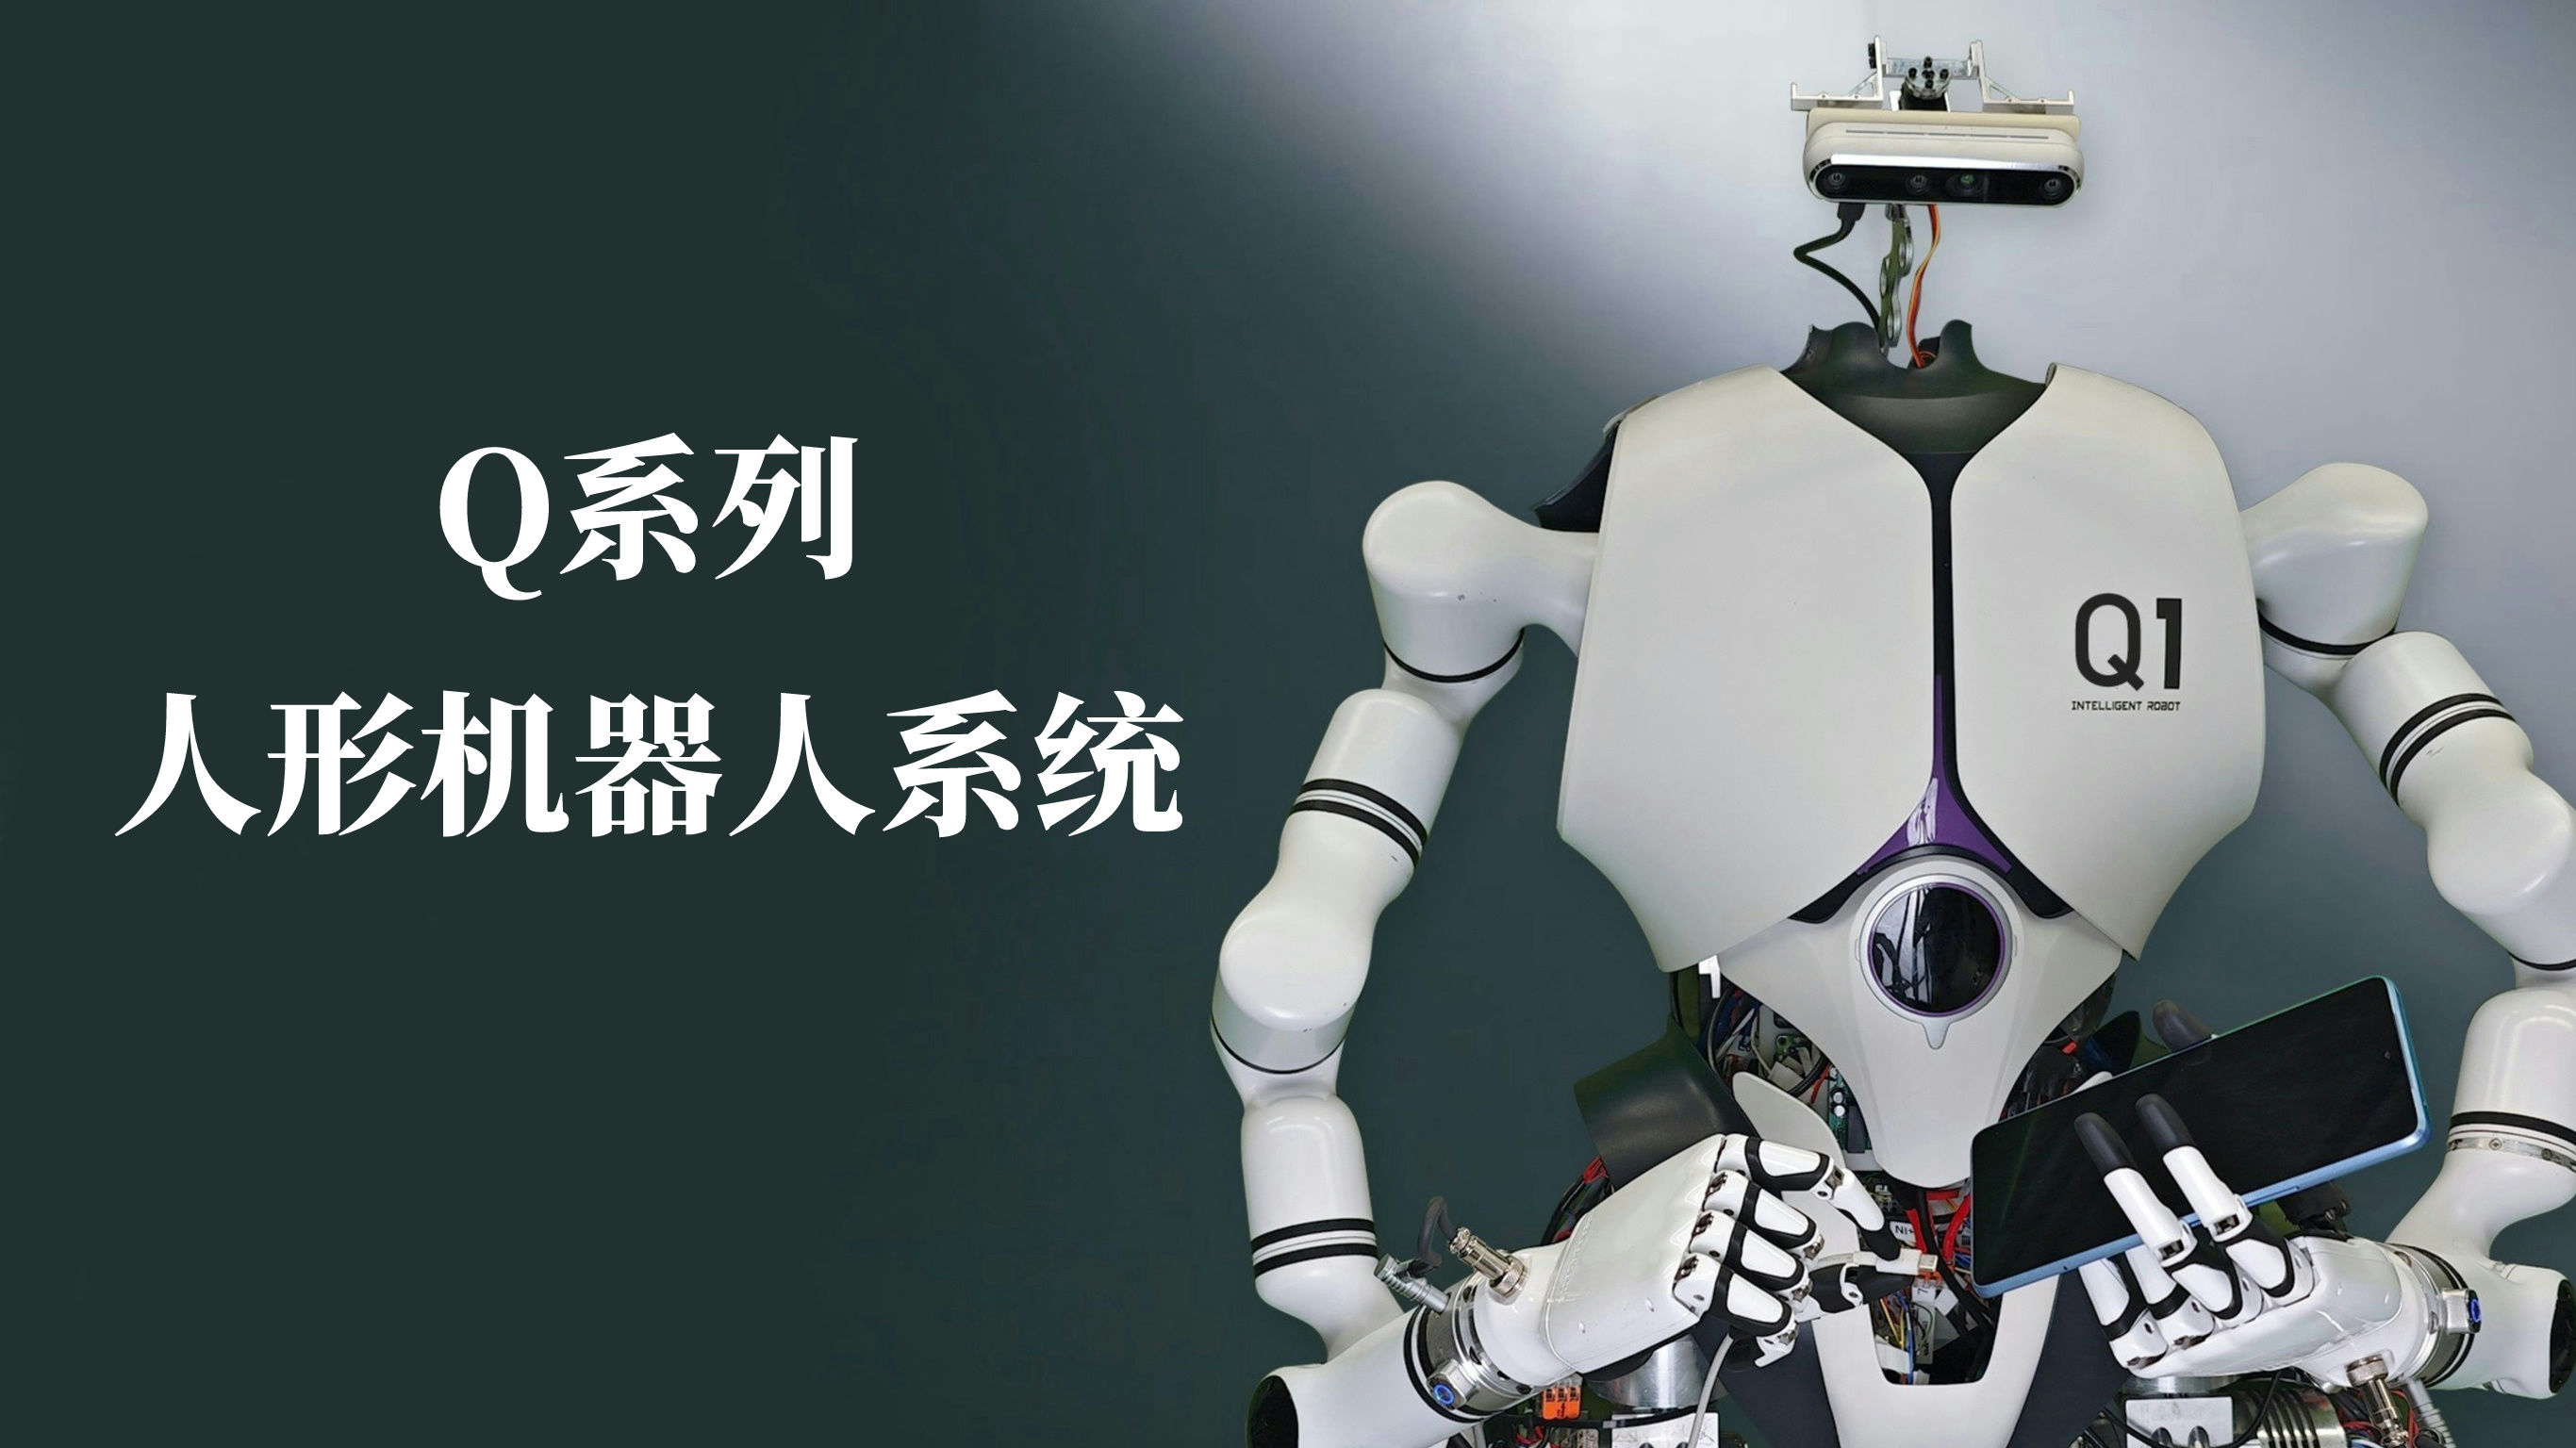 bg大游平台自营研发Q系列人形机器人系统